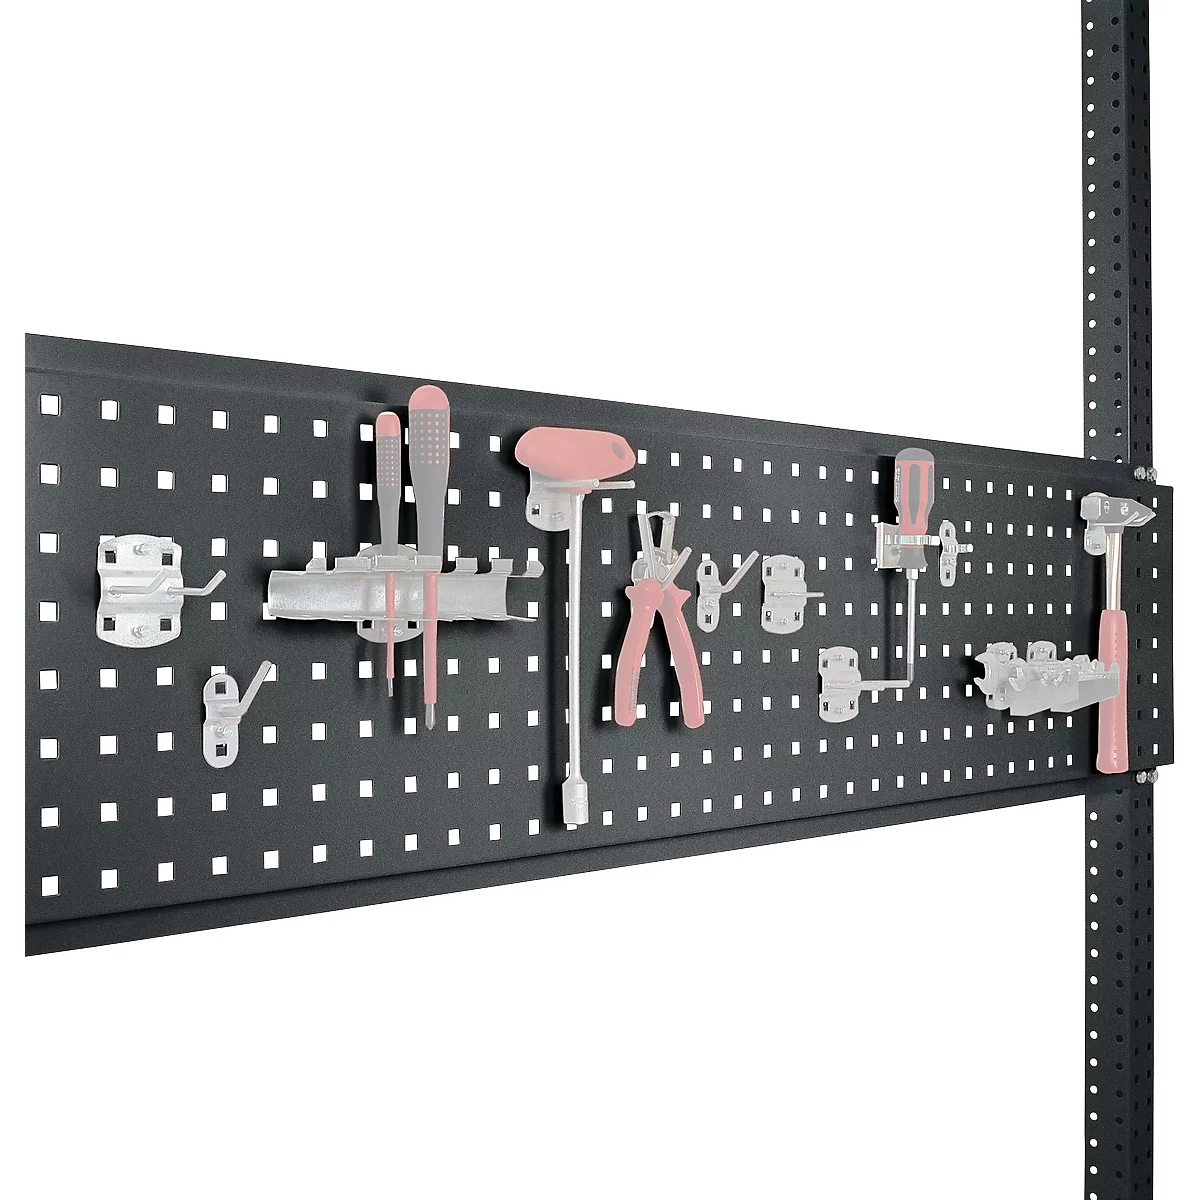 Placa perforada para herramientas, para anchura de mesa 1250 mm, para serie Universal/Profi, antracita RAL 7016